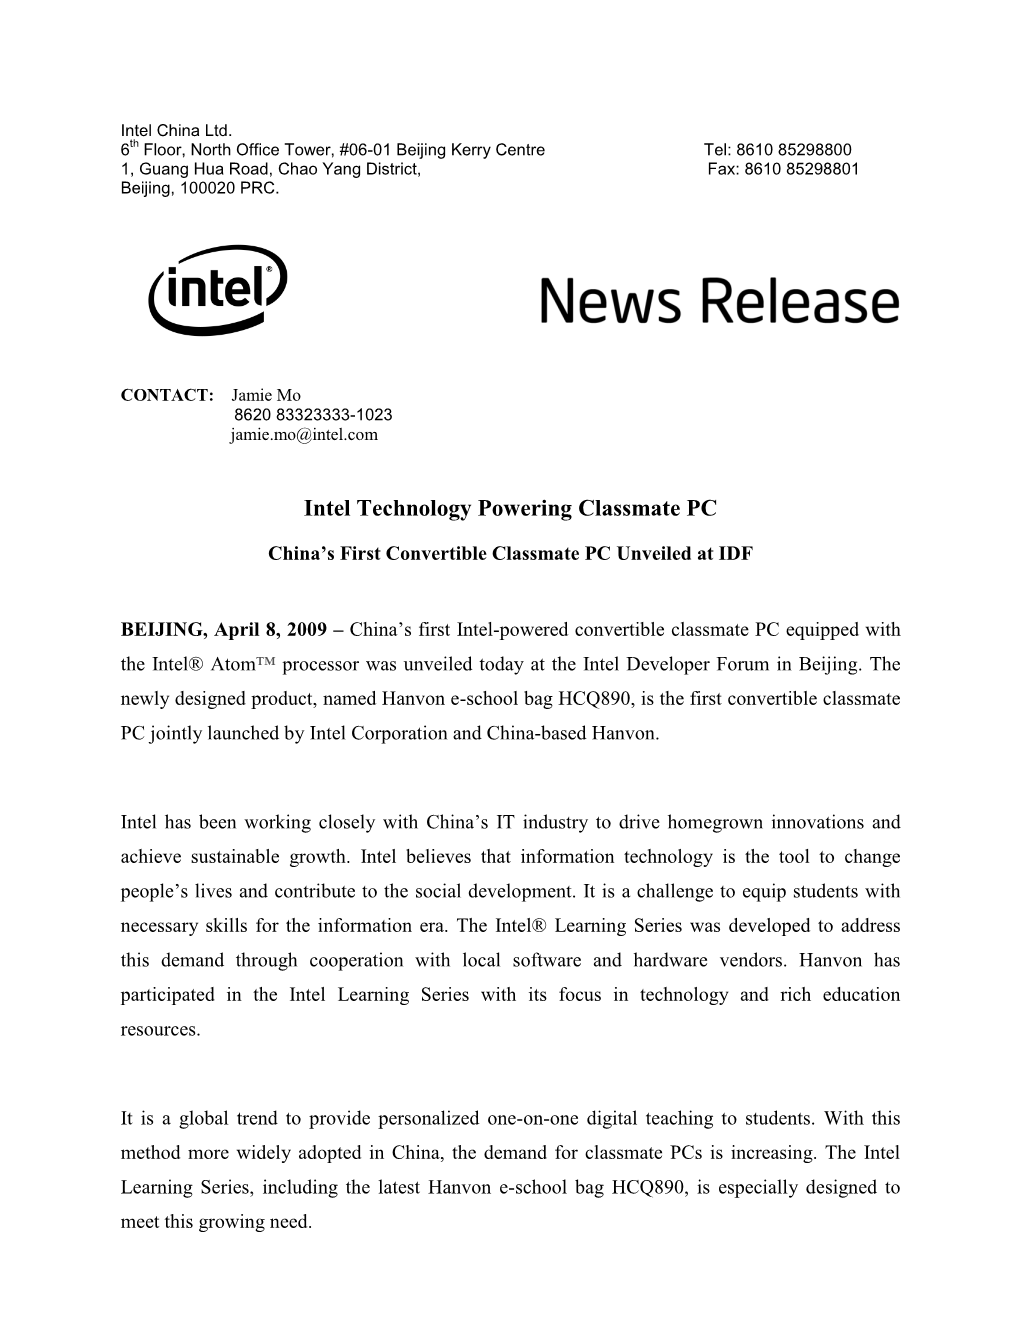 Intel Technology Powering Classmate PC